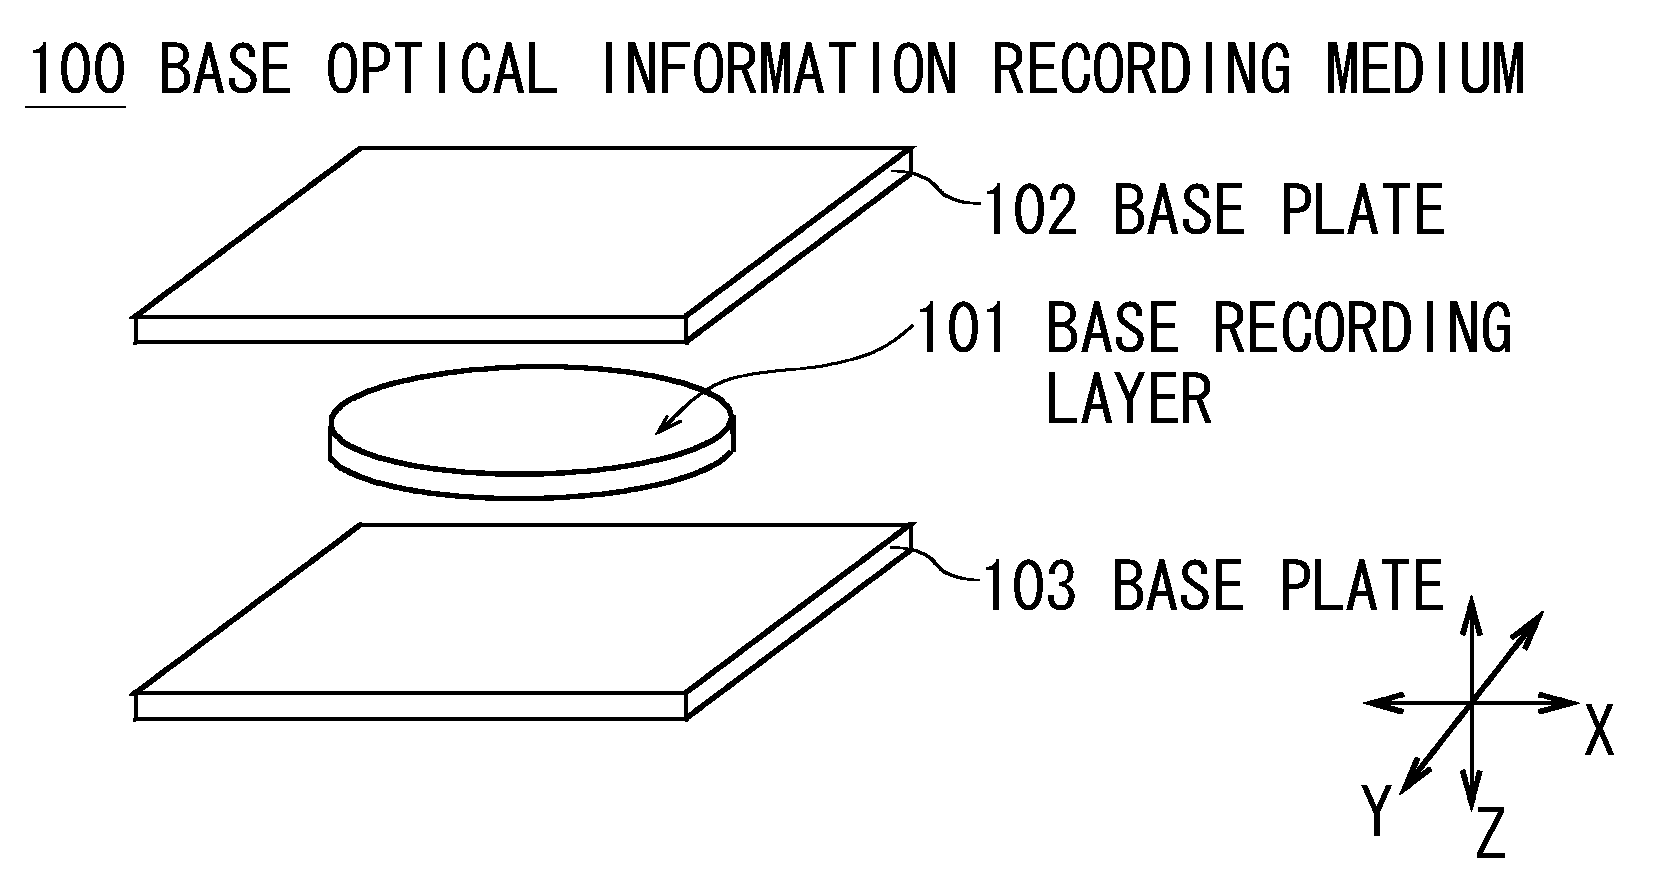 Optical information recording medium